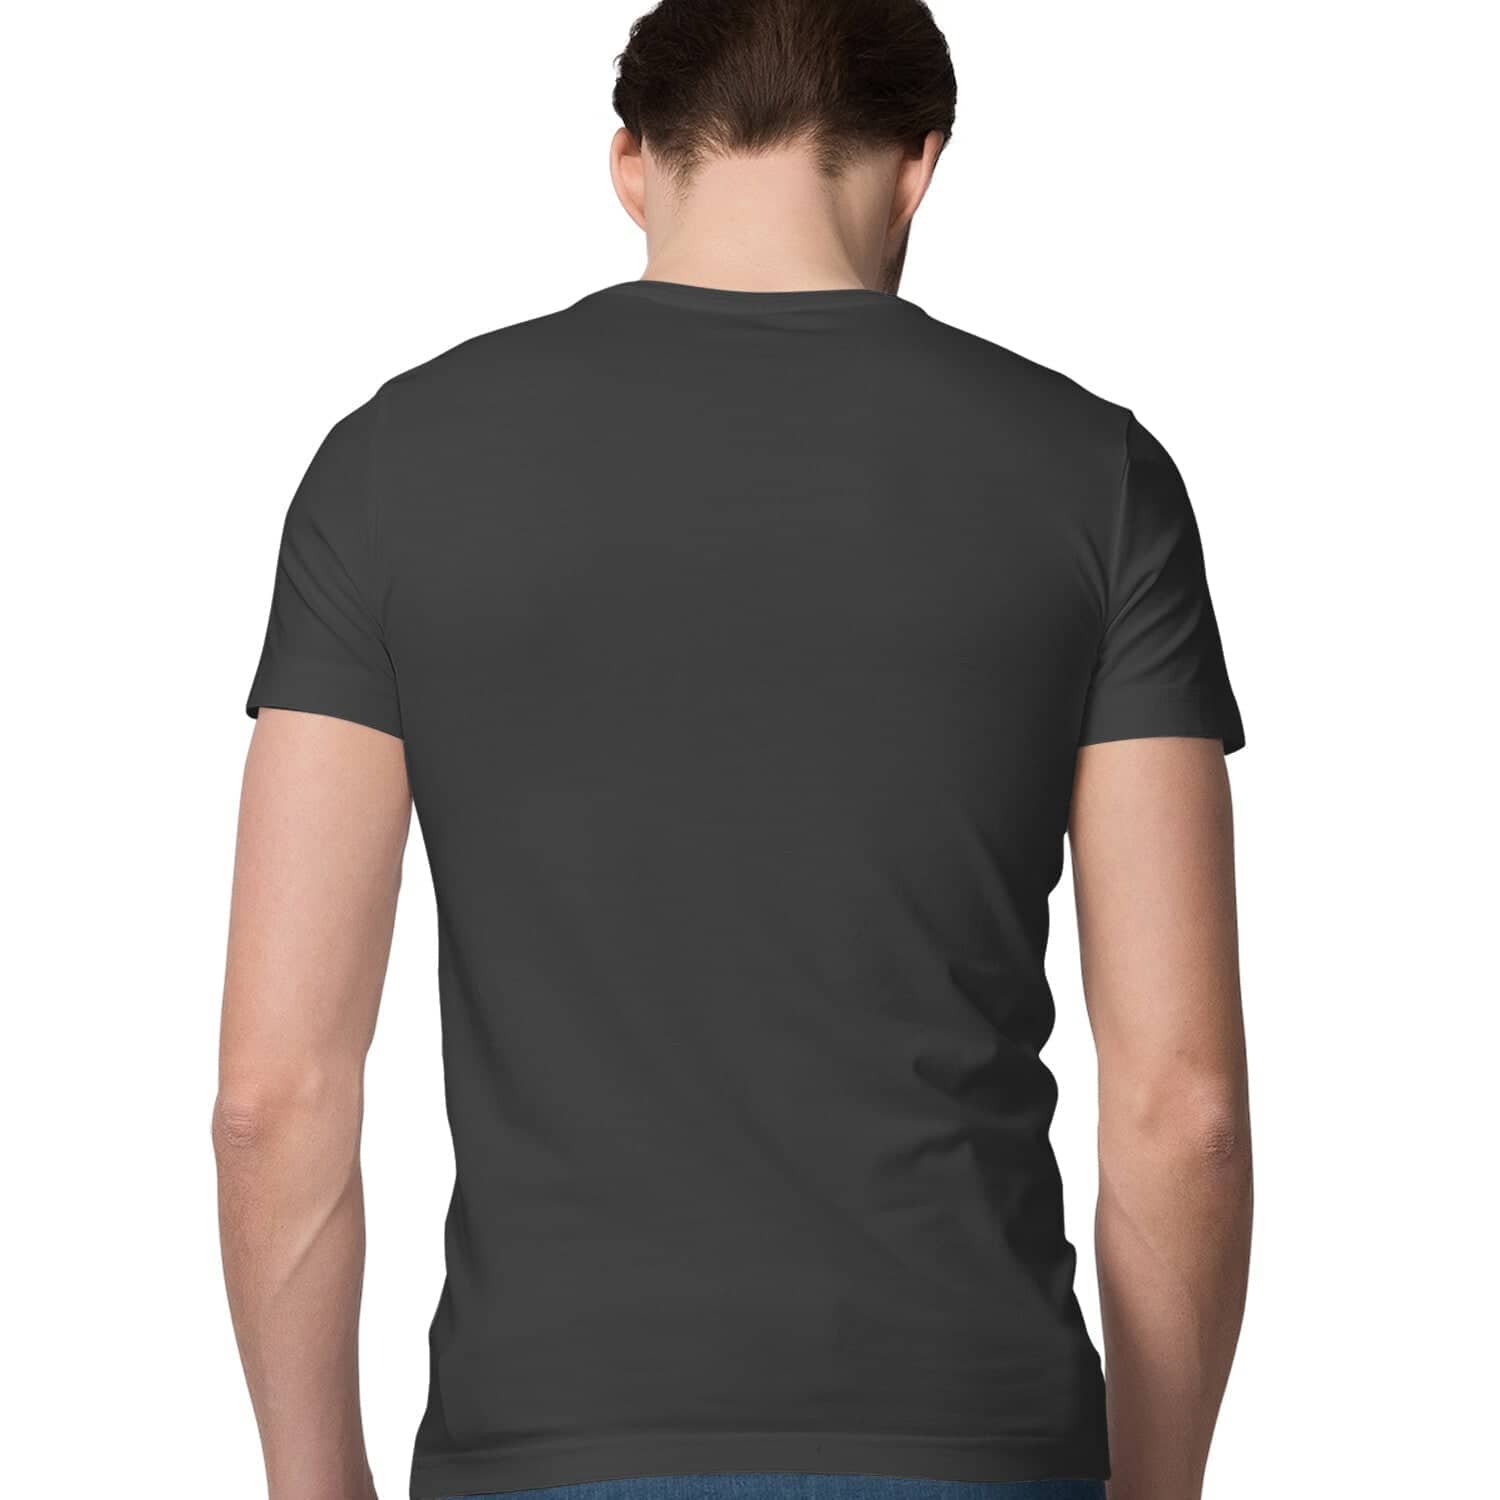 SAMCRO Official Jax Teller Black T Shirt for Men freeshipping - Catch My Drift India